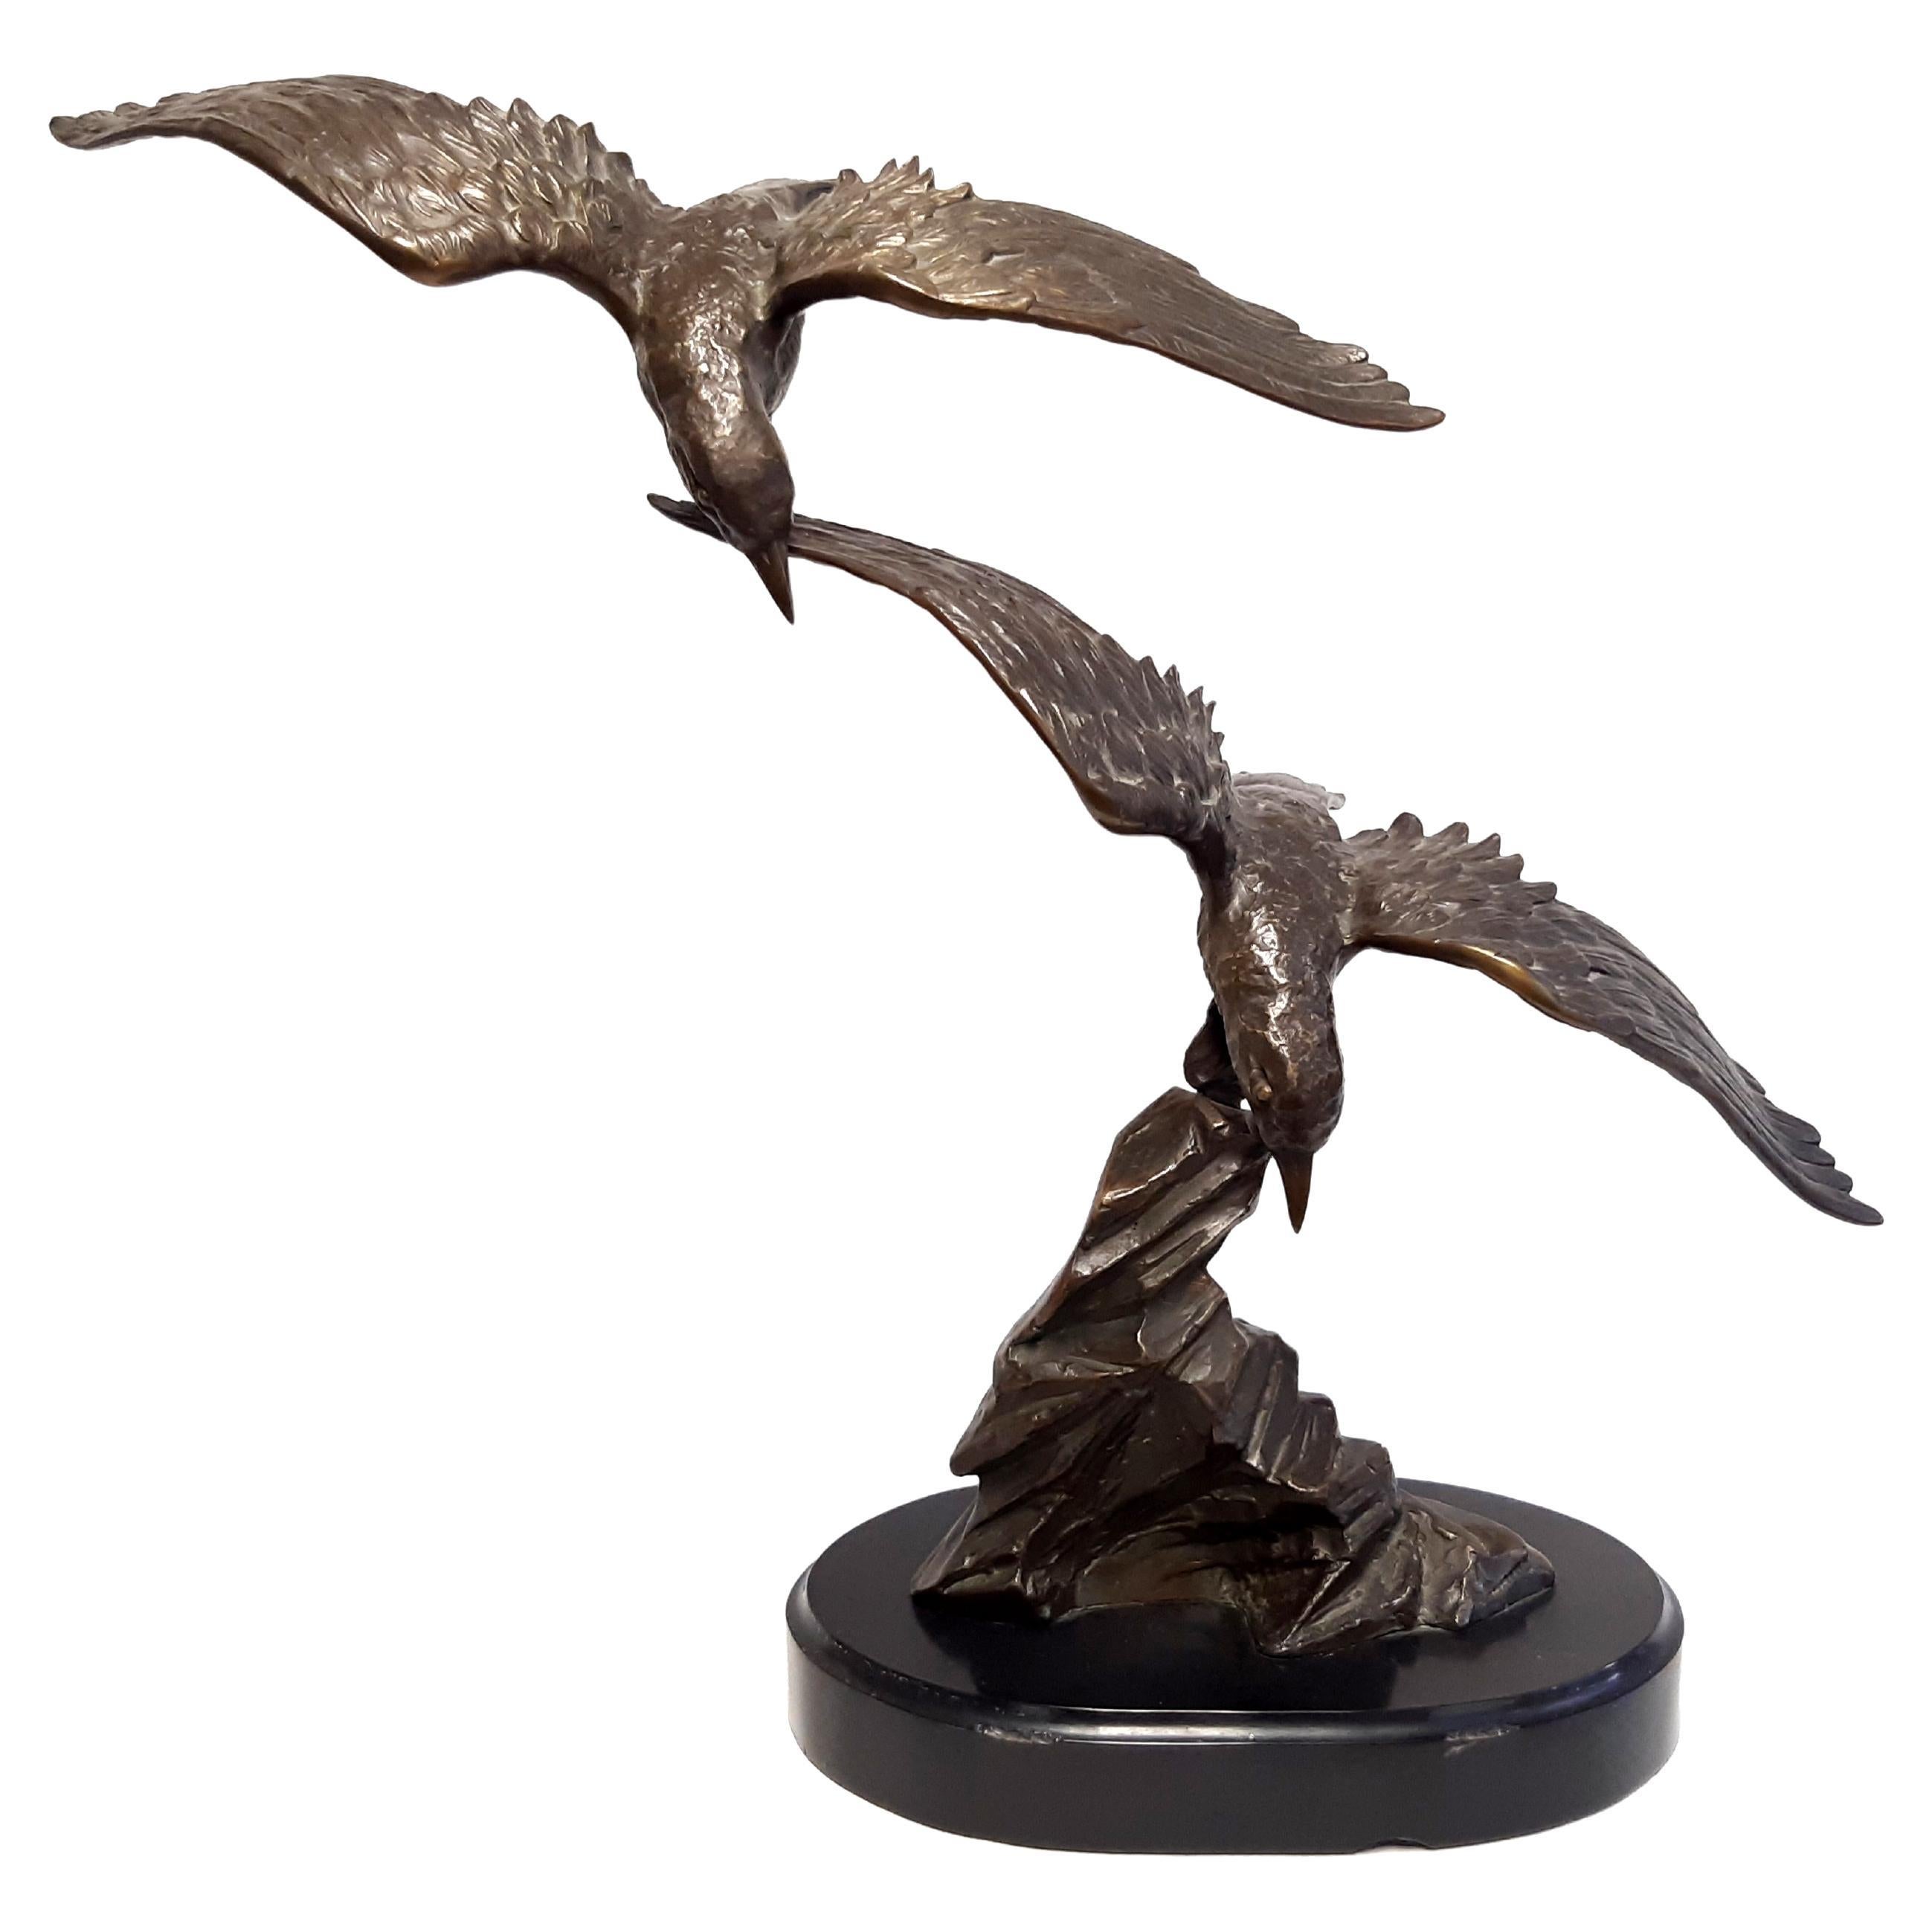 Tissot Bronzeskulptur "2 fliegende Möwen" - bronze sculpture "2 Flying Seagulls" For Sale